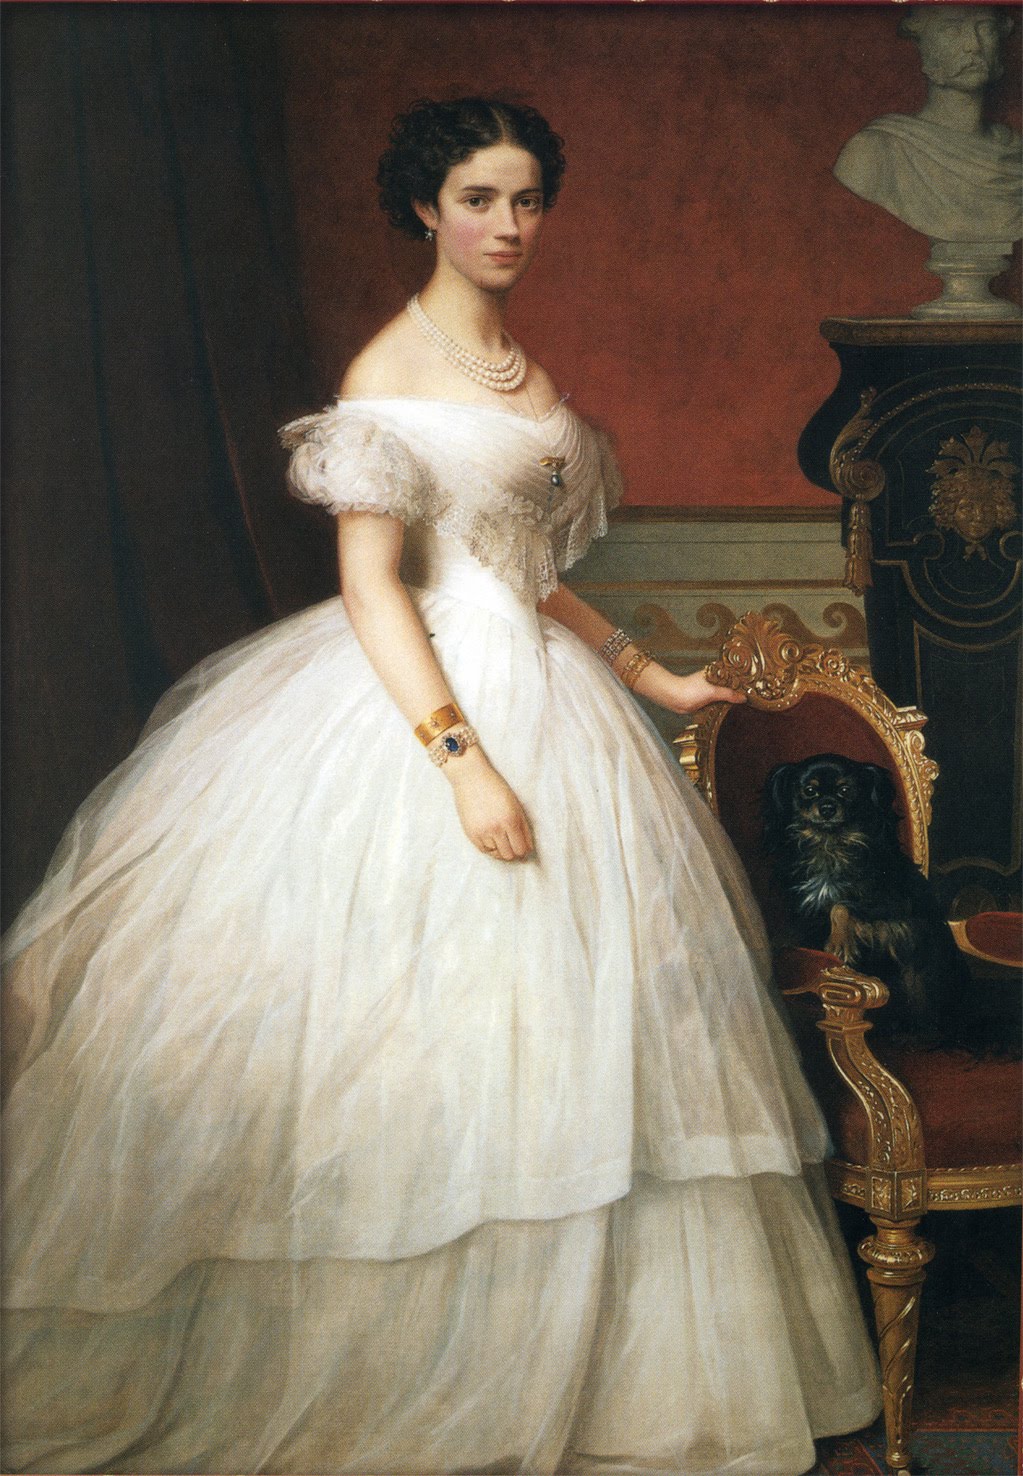 Portrait of Princess Dagmar of Denmark with her dog wearing a Crinoline